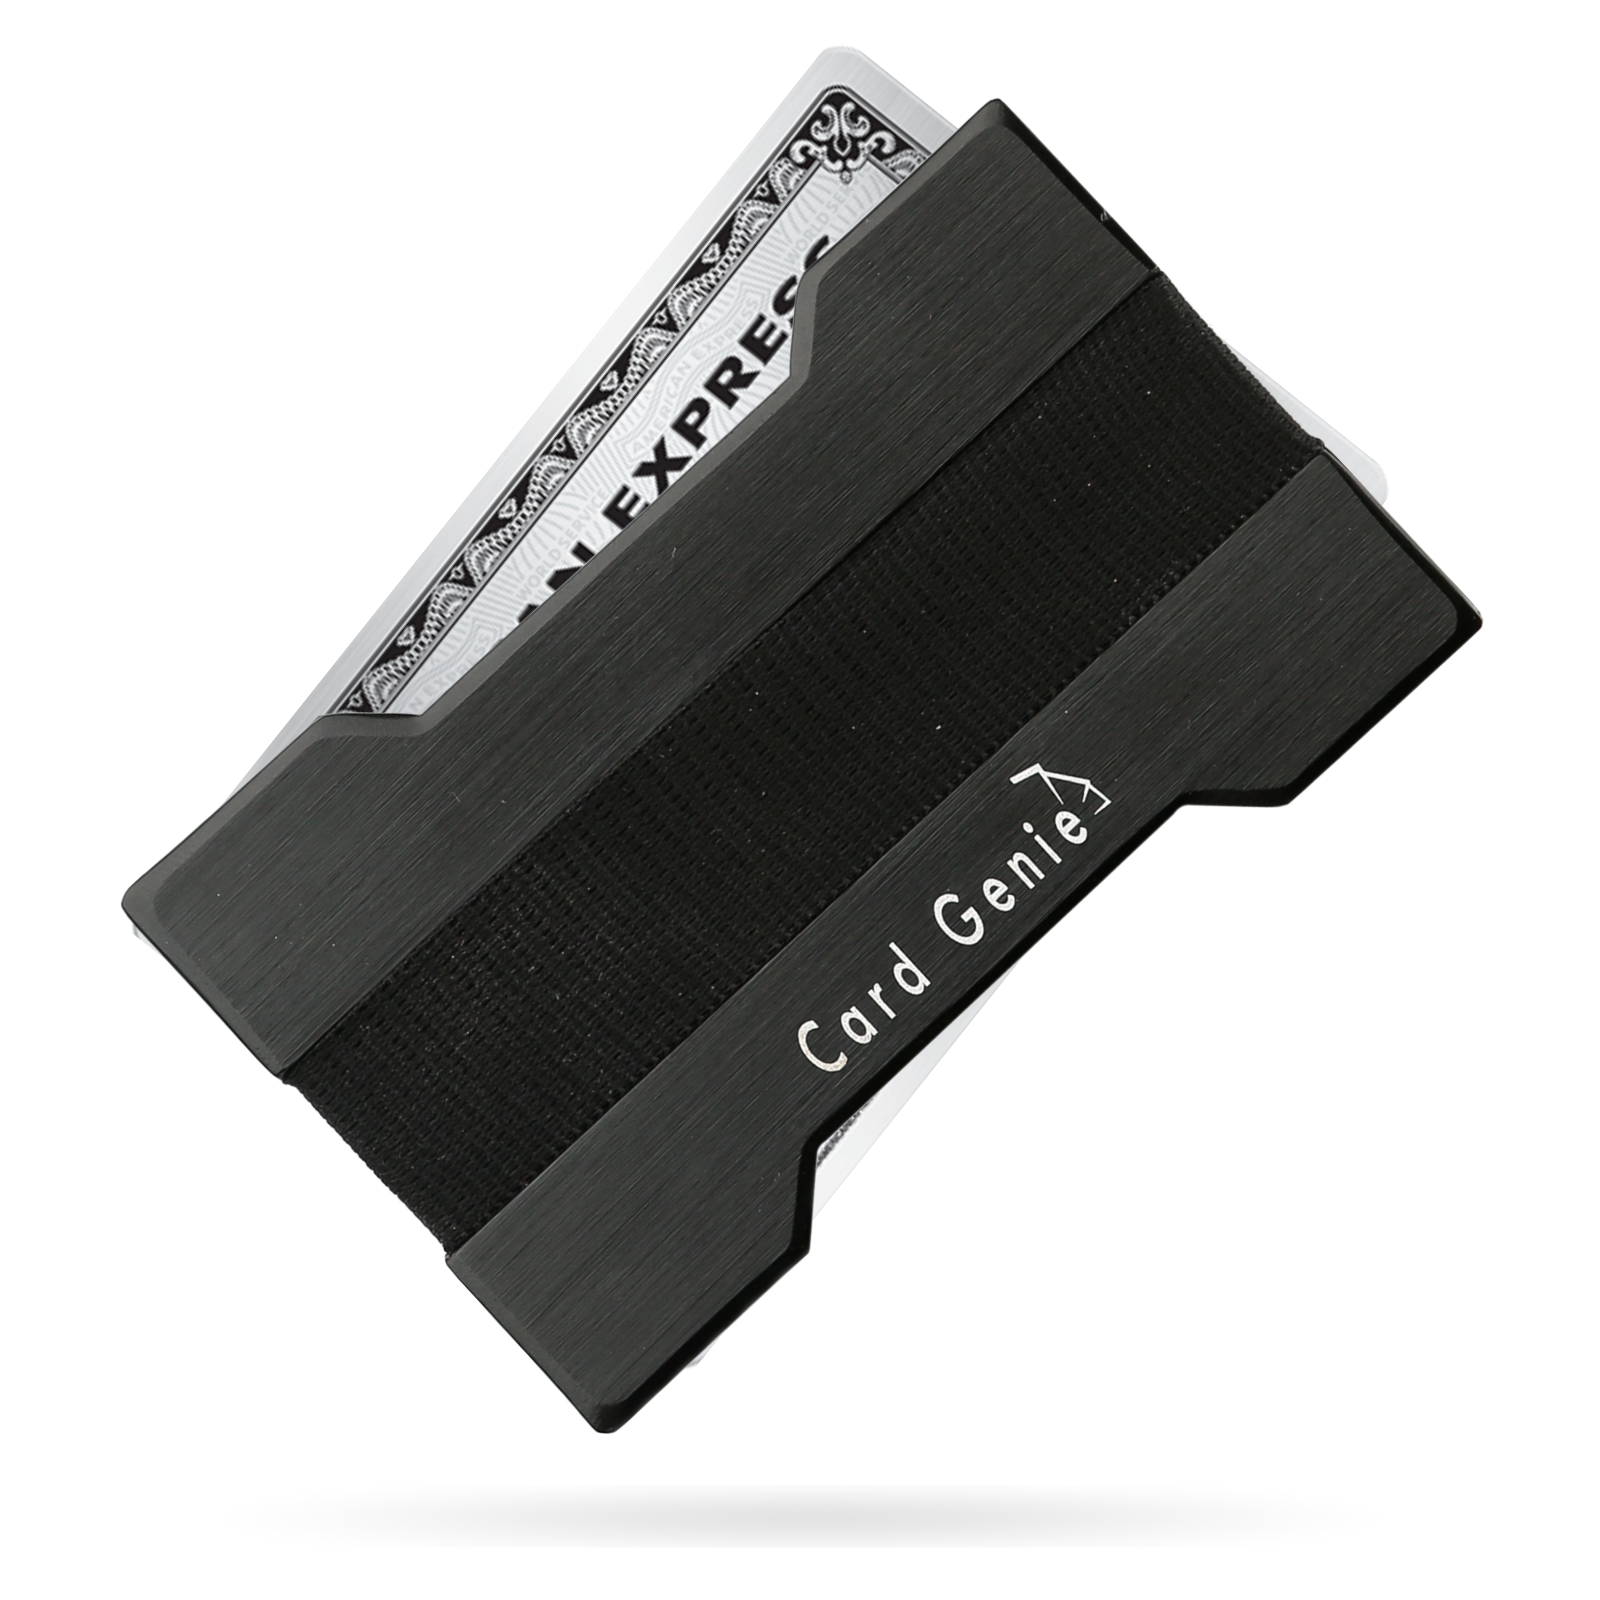 Card Genie TitanBand - Metal Card Holder| 10 Cards & Cash